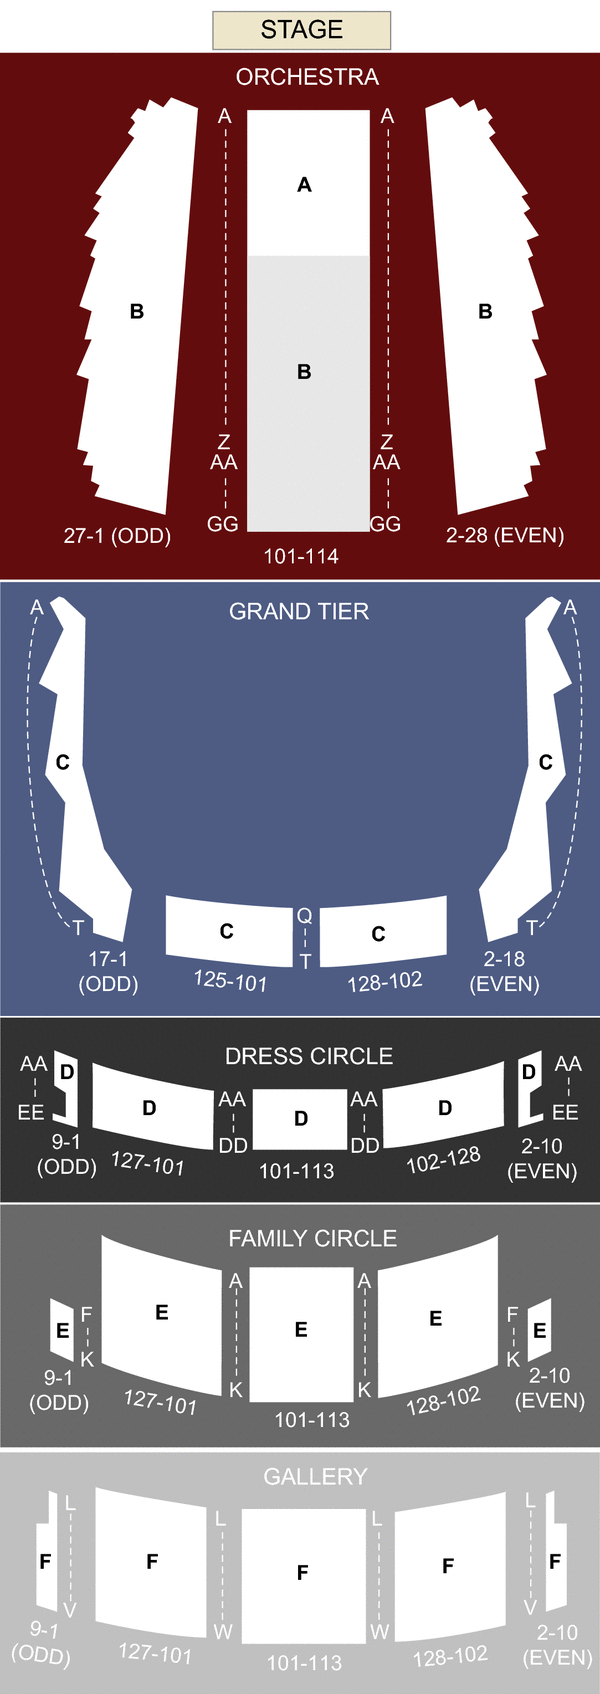 Heinz Hall Seating Chart